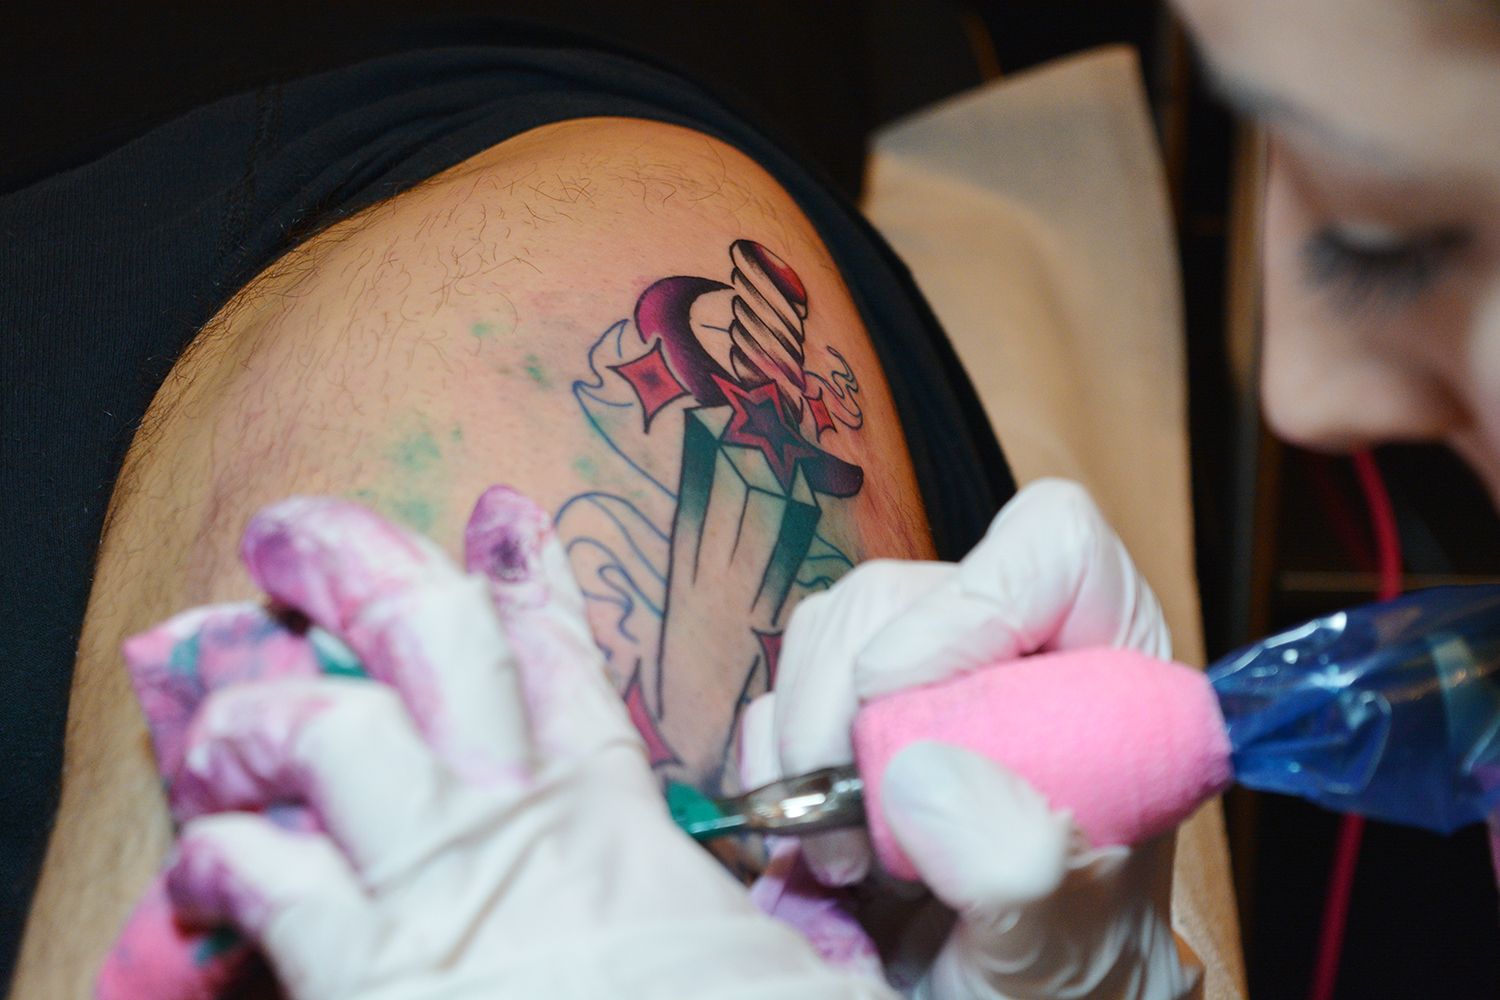 Tony Carter (Scene360) getting tattooed by widow mac